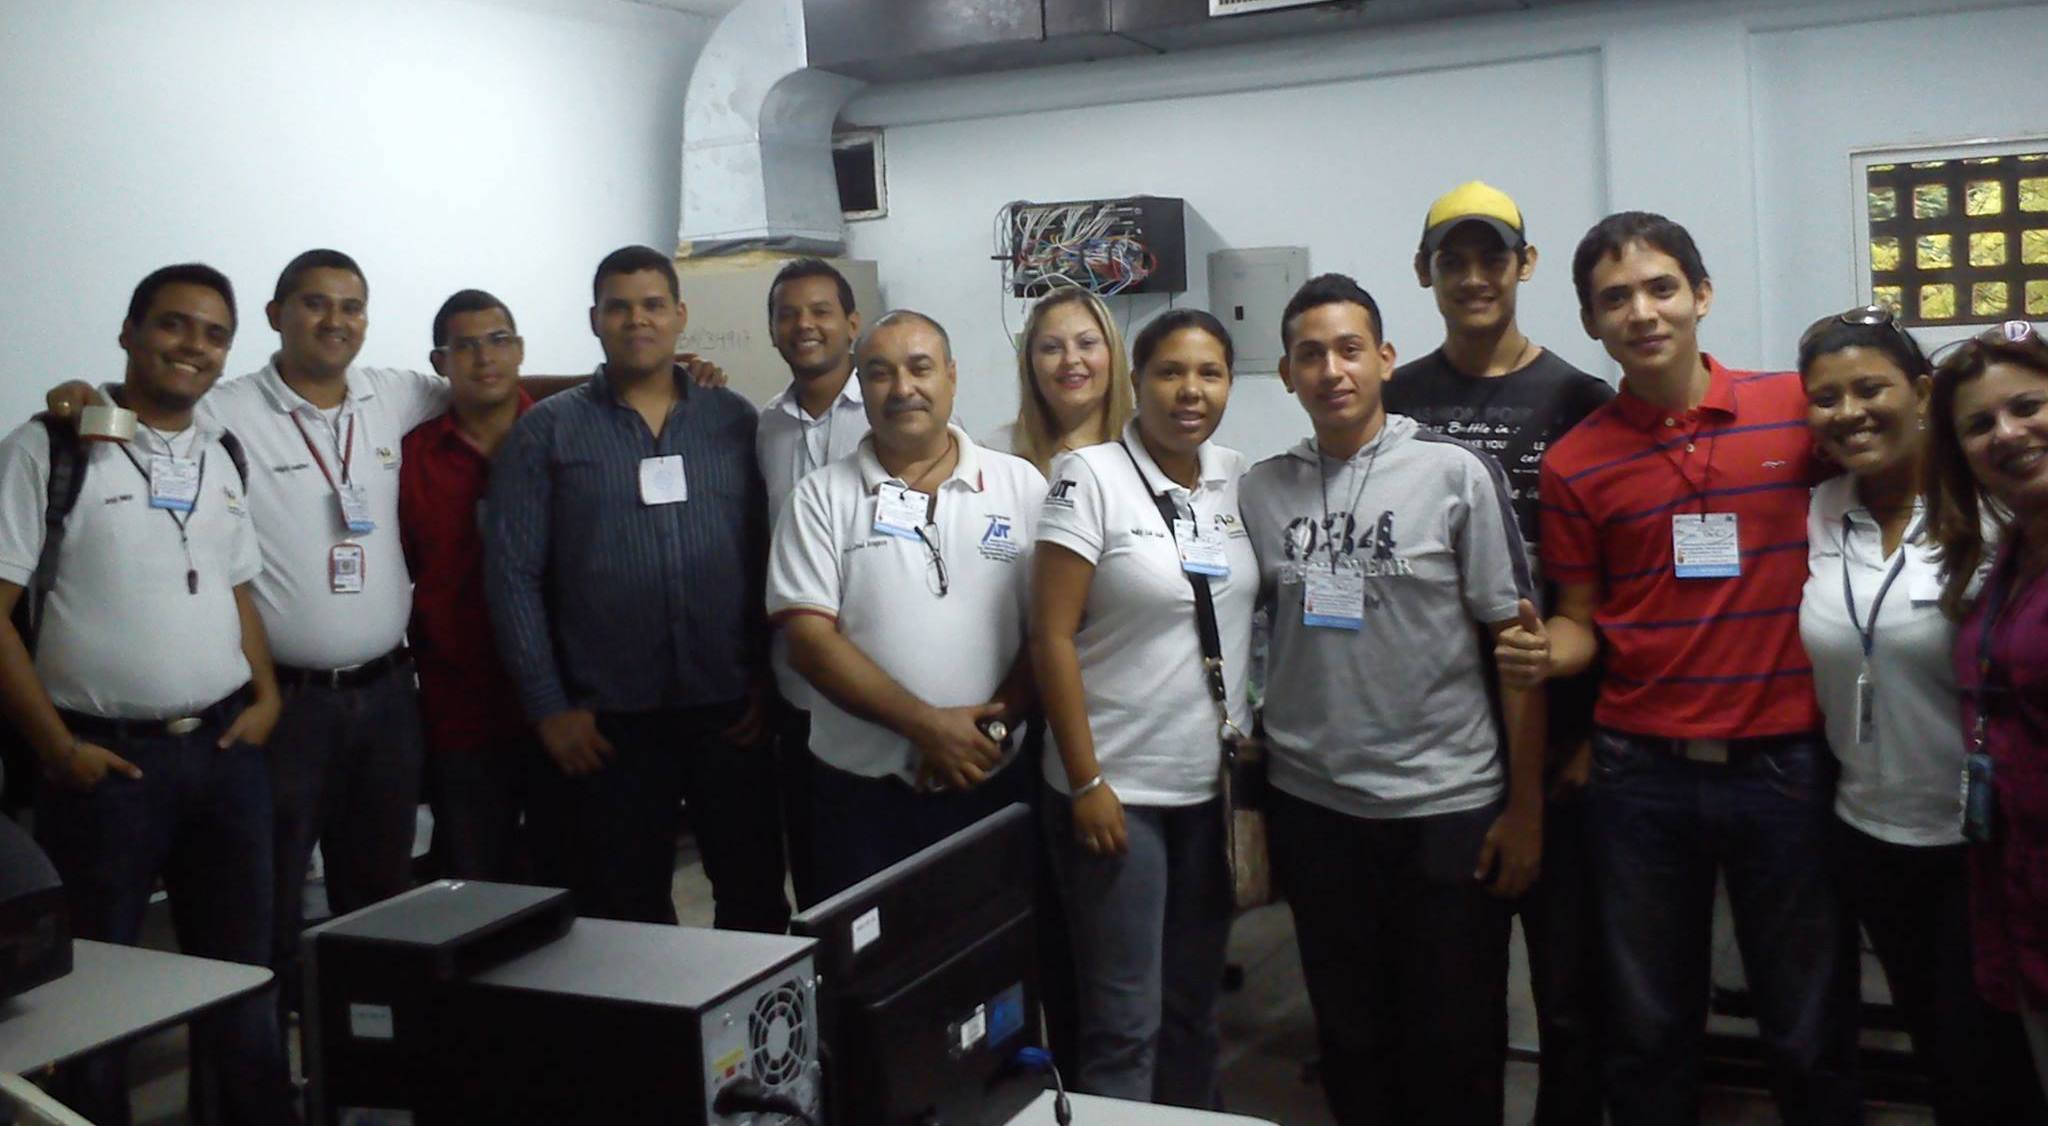 Juan Delgadillo, friends, and teachers after winning university informatics olympiads at Maracaibo University Institute of Technology